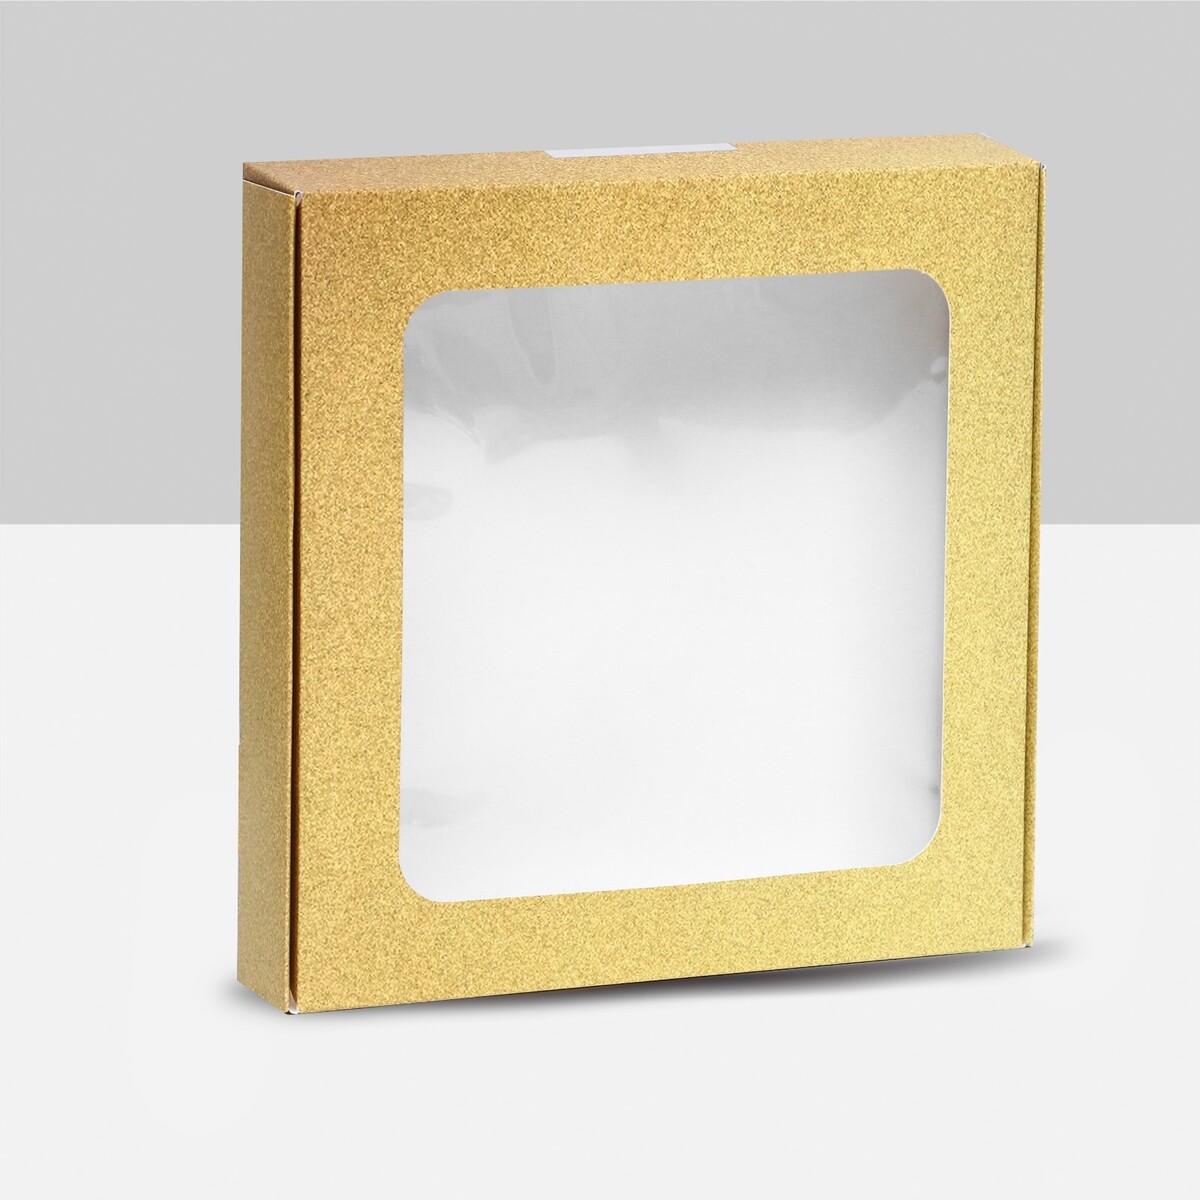 Коробка самосборная, с окном, золотая, 16 х 16 х 3 см коробка самосборная с окном мятная 19 х 19 х 3 см